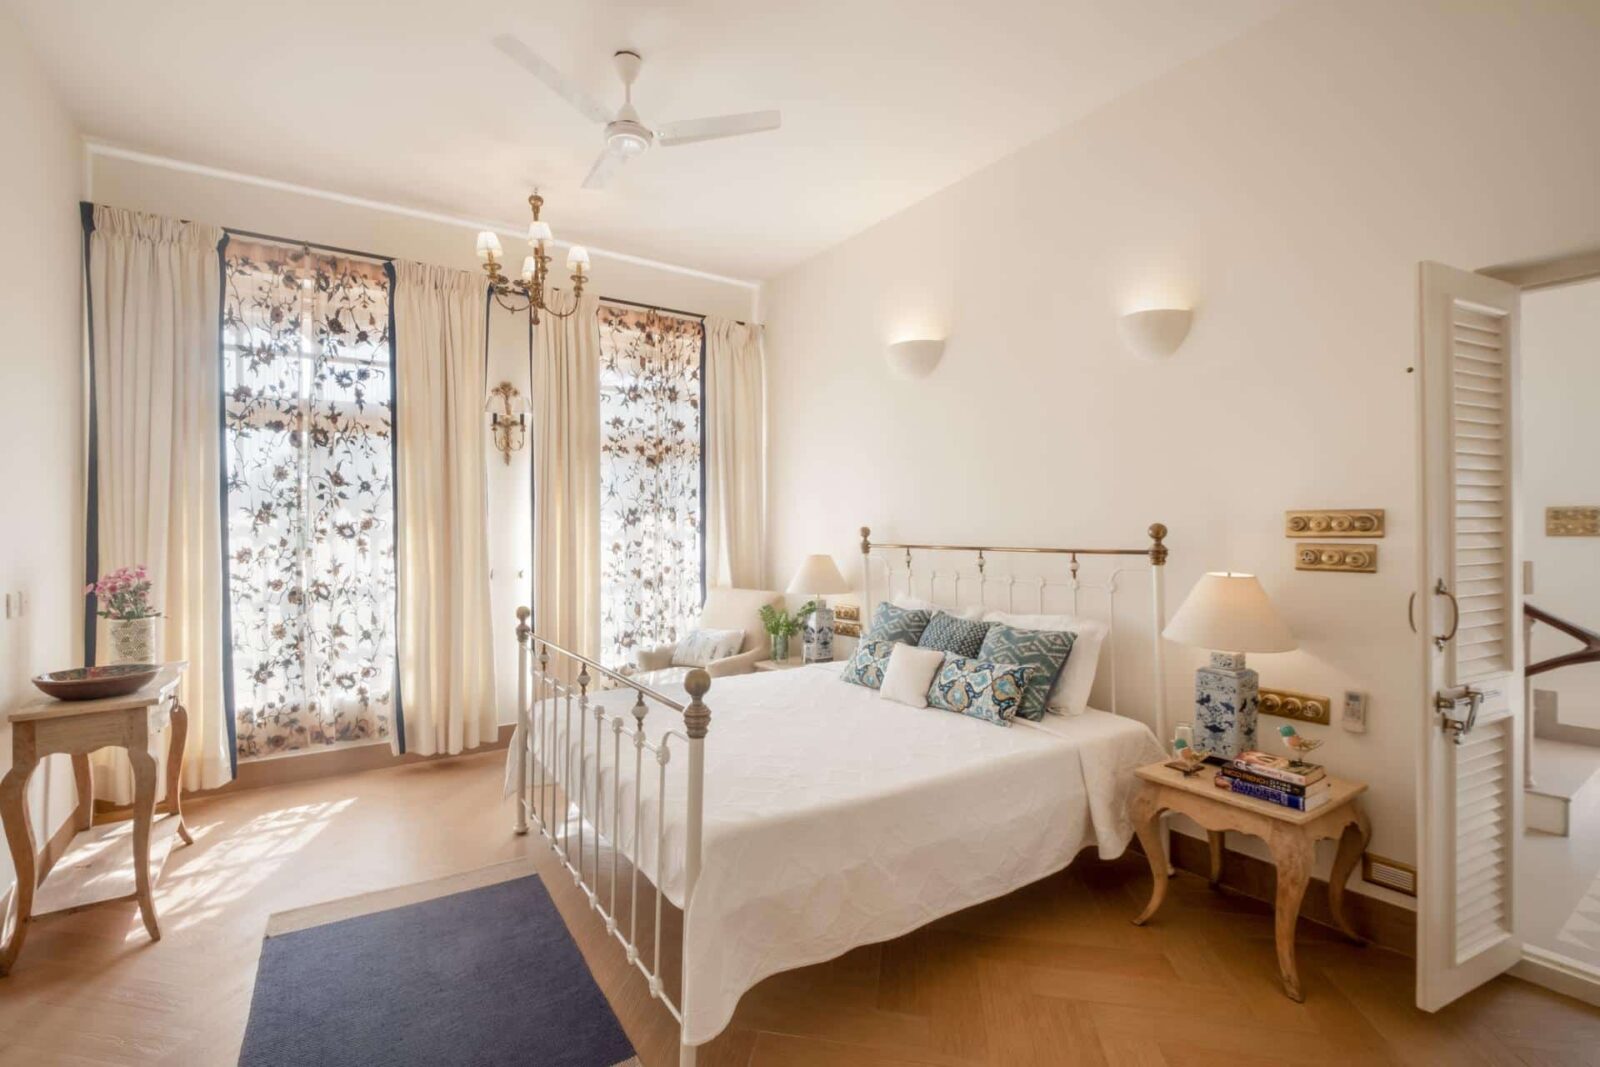 Villa Vivre - Premium Villas for Sale in Goa - Stunning Bedroom